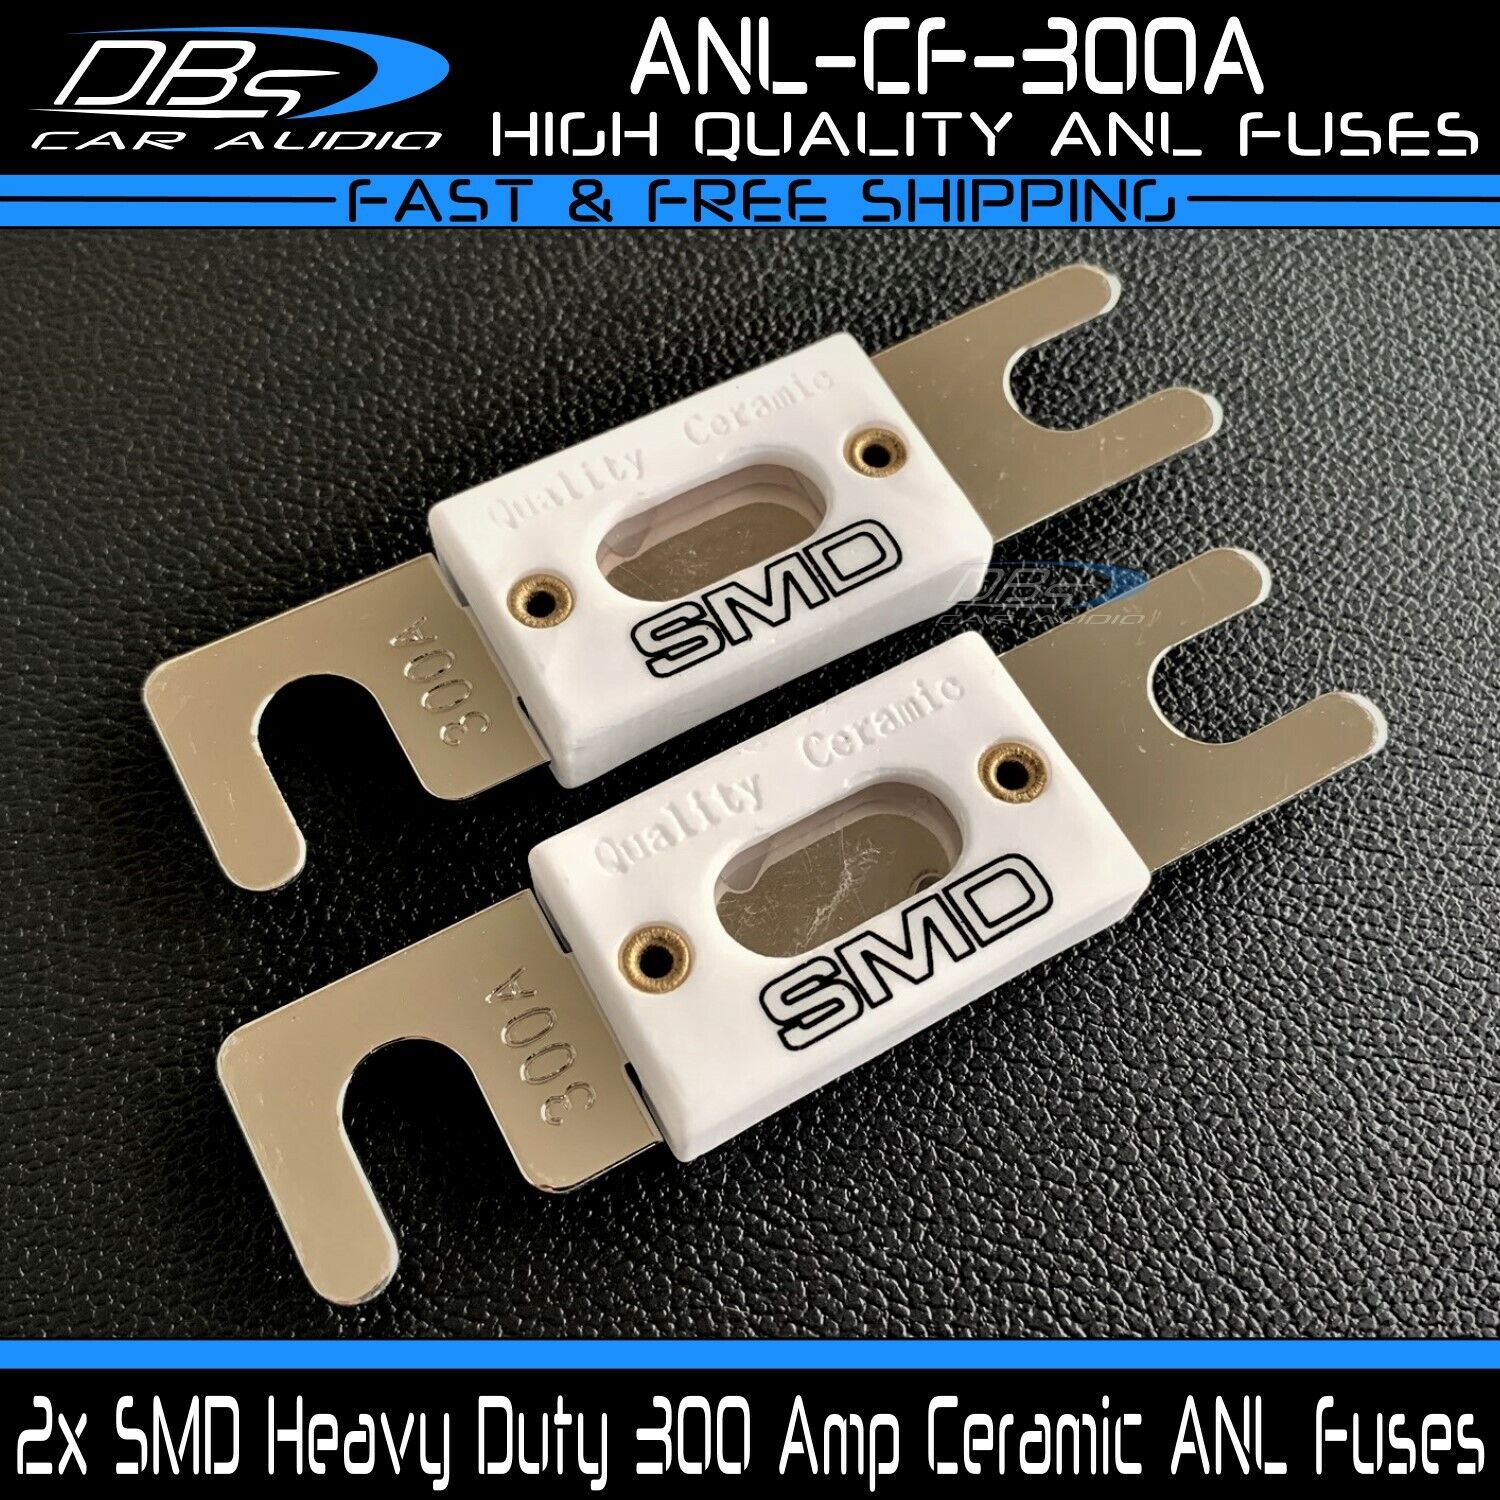 2x Steve Meade SMD 300 Amp Ceramic ANL Fuse 300A Heavy Duty High Quality Fuses SMD ANL CF-300A 300A